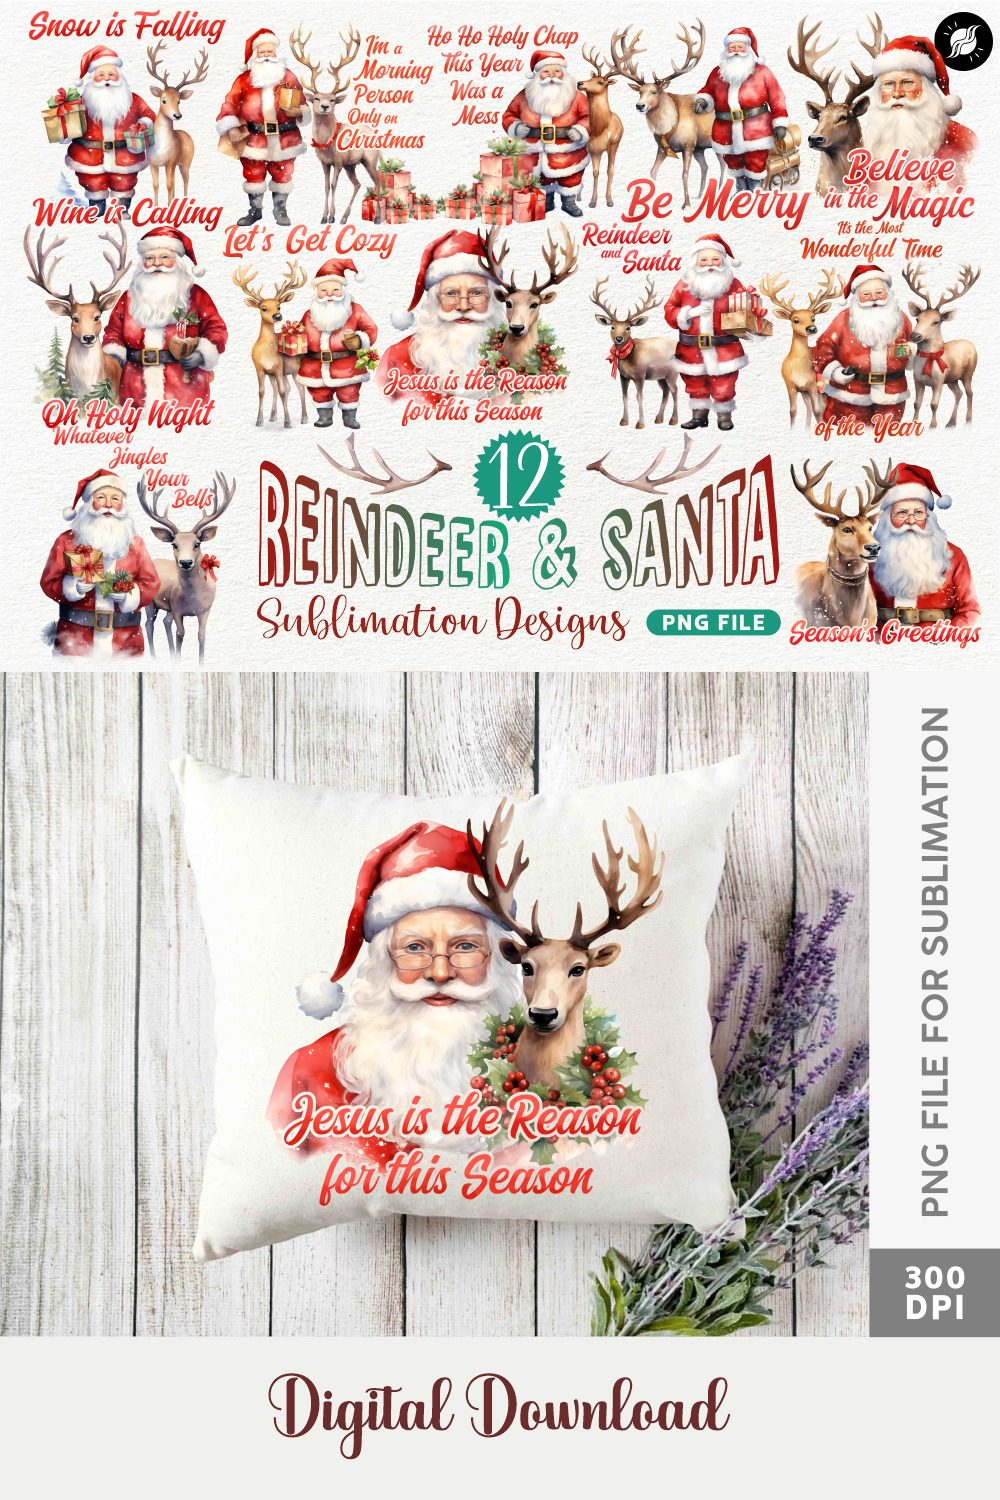 Christmas Reindeer Santa Sublimation Designs Bundle pinterest preview image.